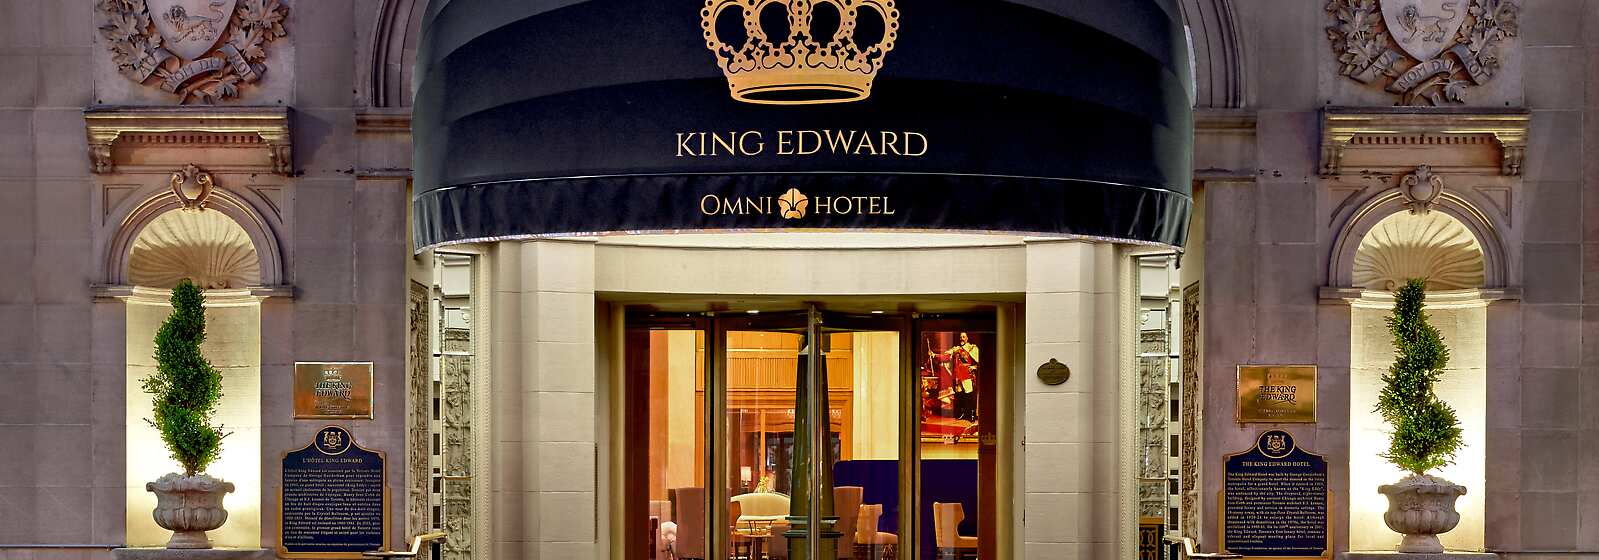 The Omni King Edward Hotel - Entrance